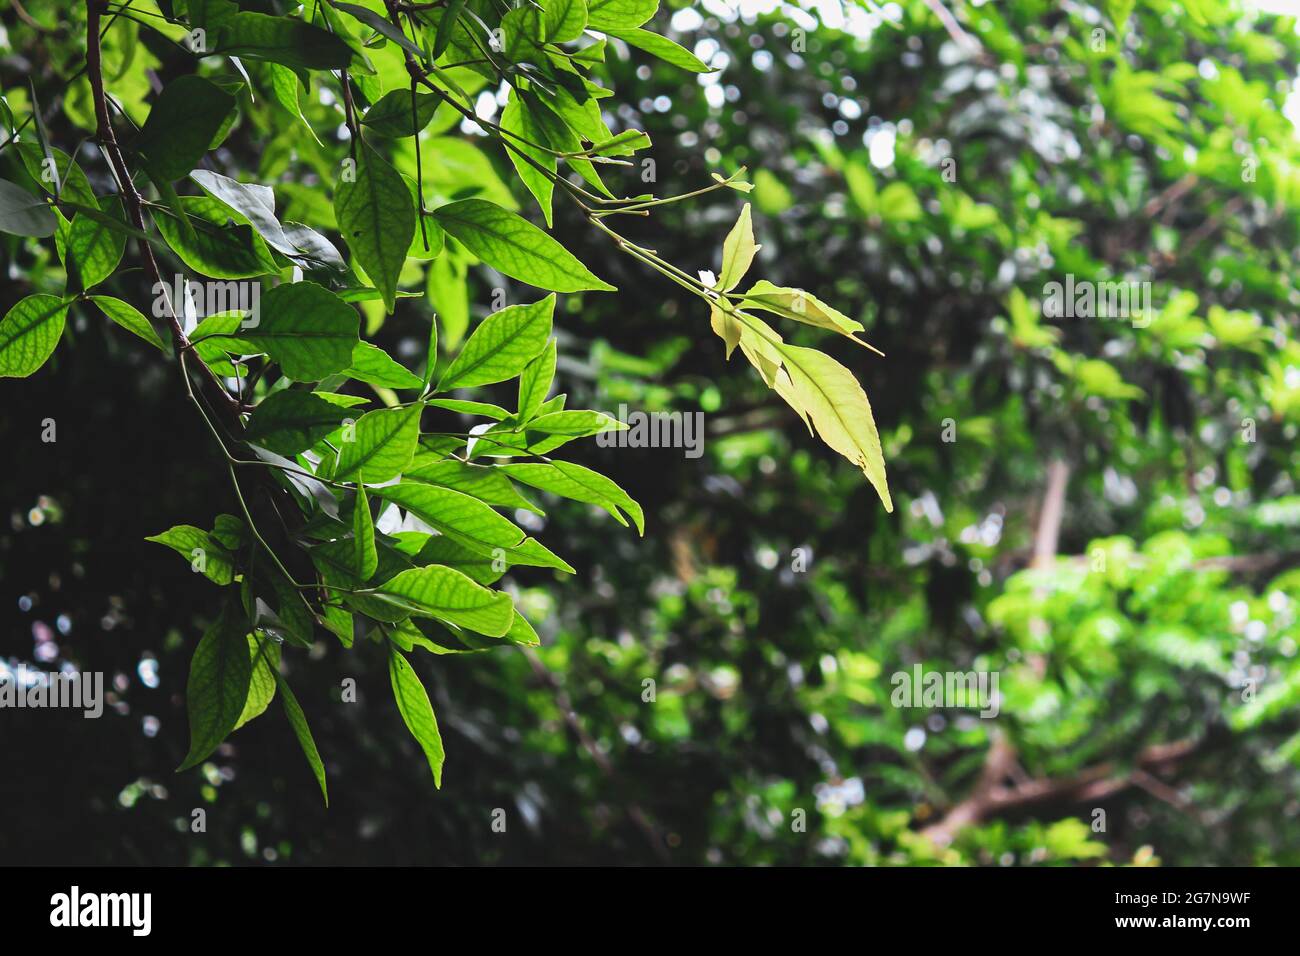 Tropical wood apple plant image Stock Photo